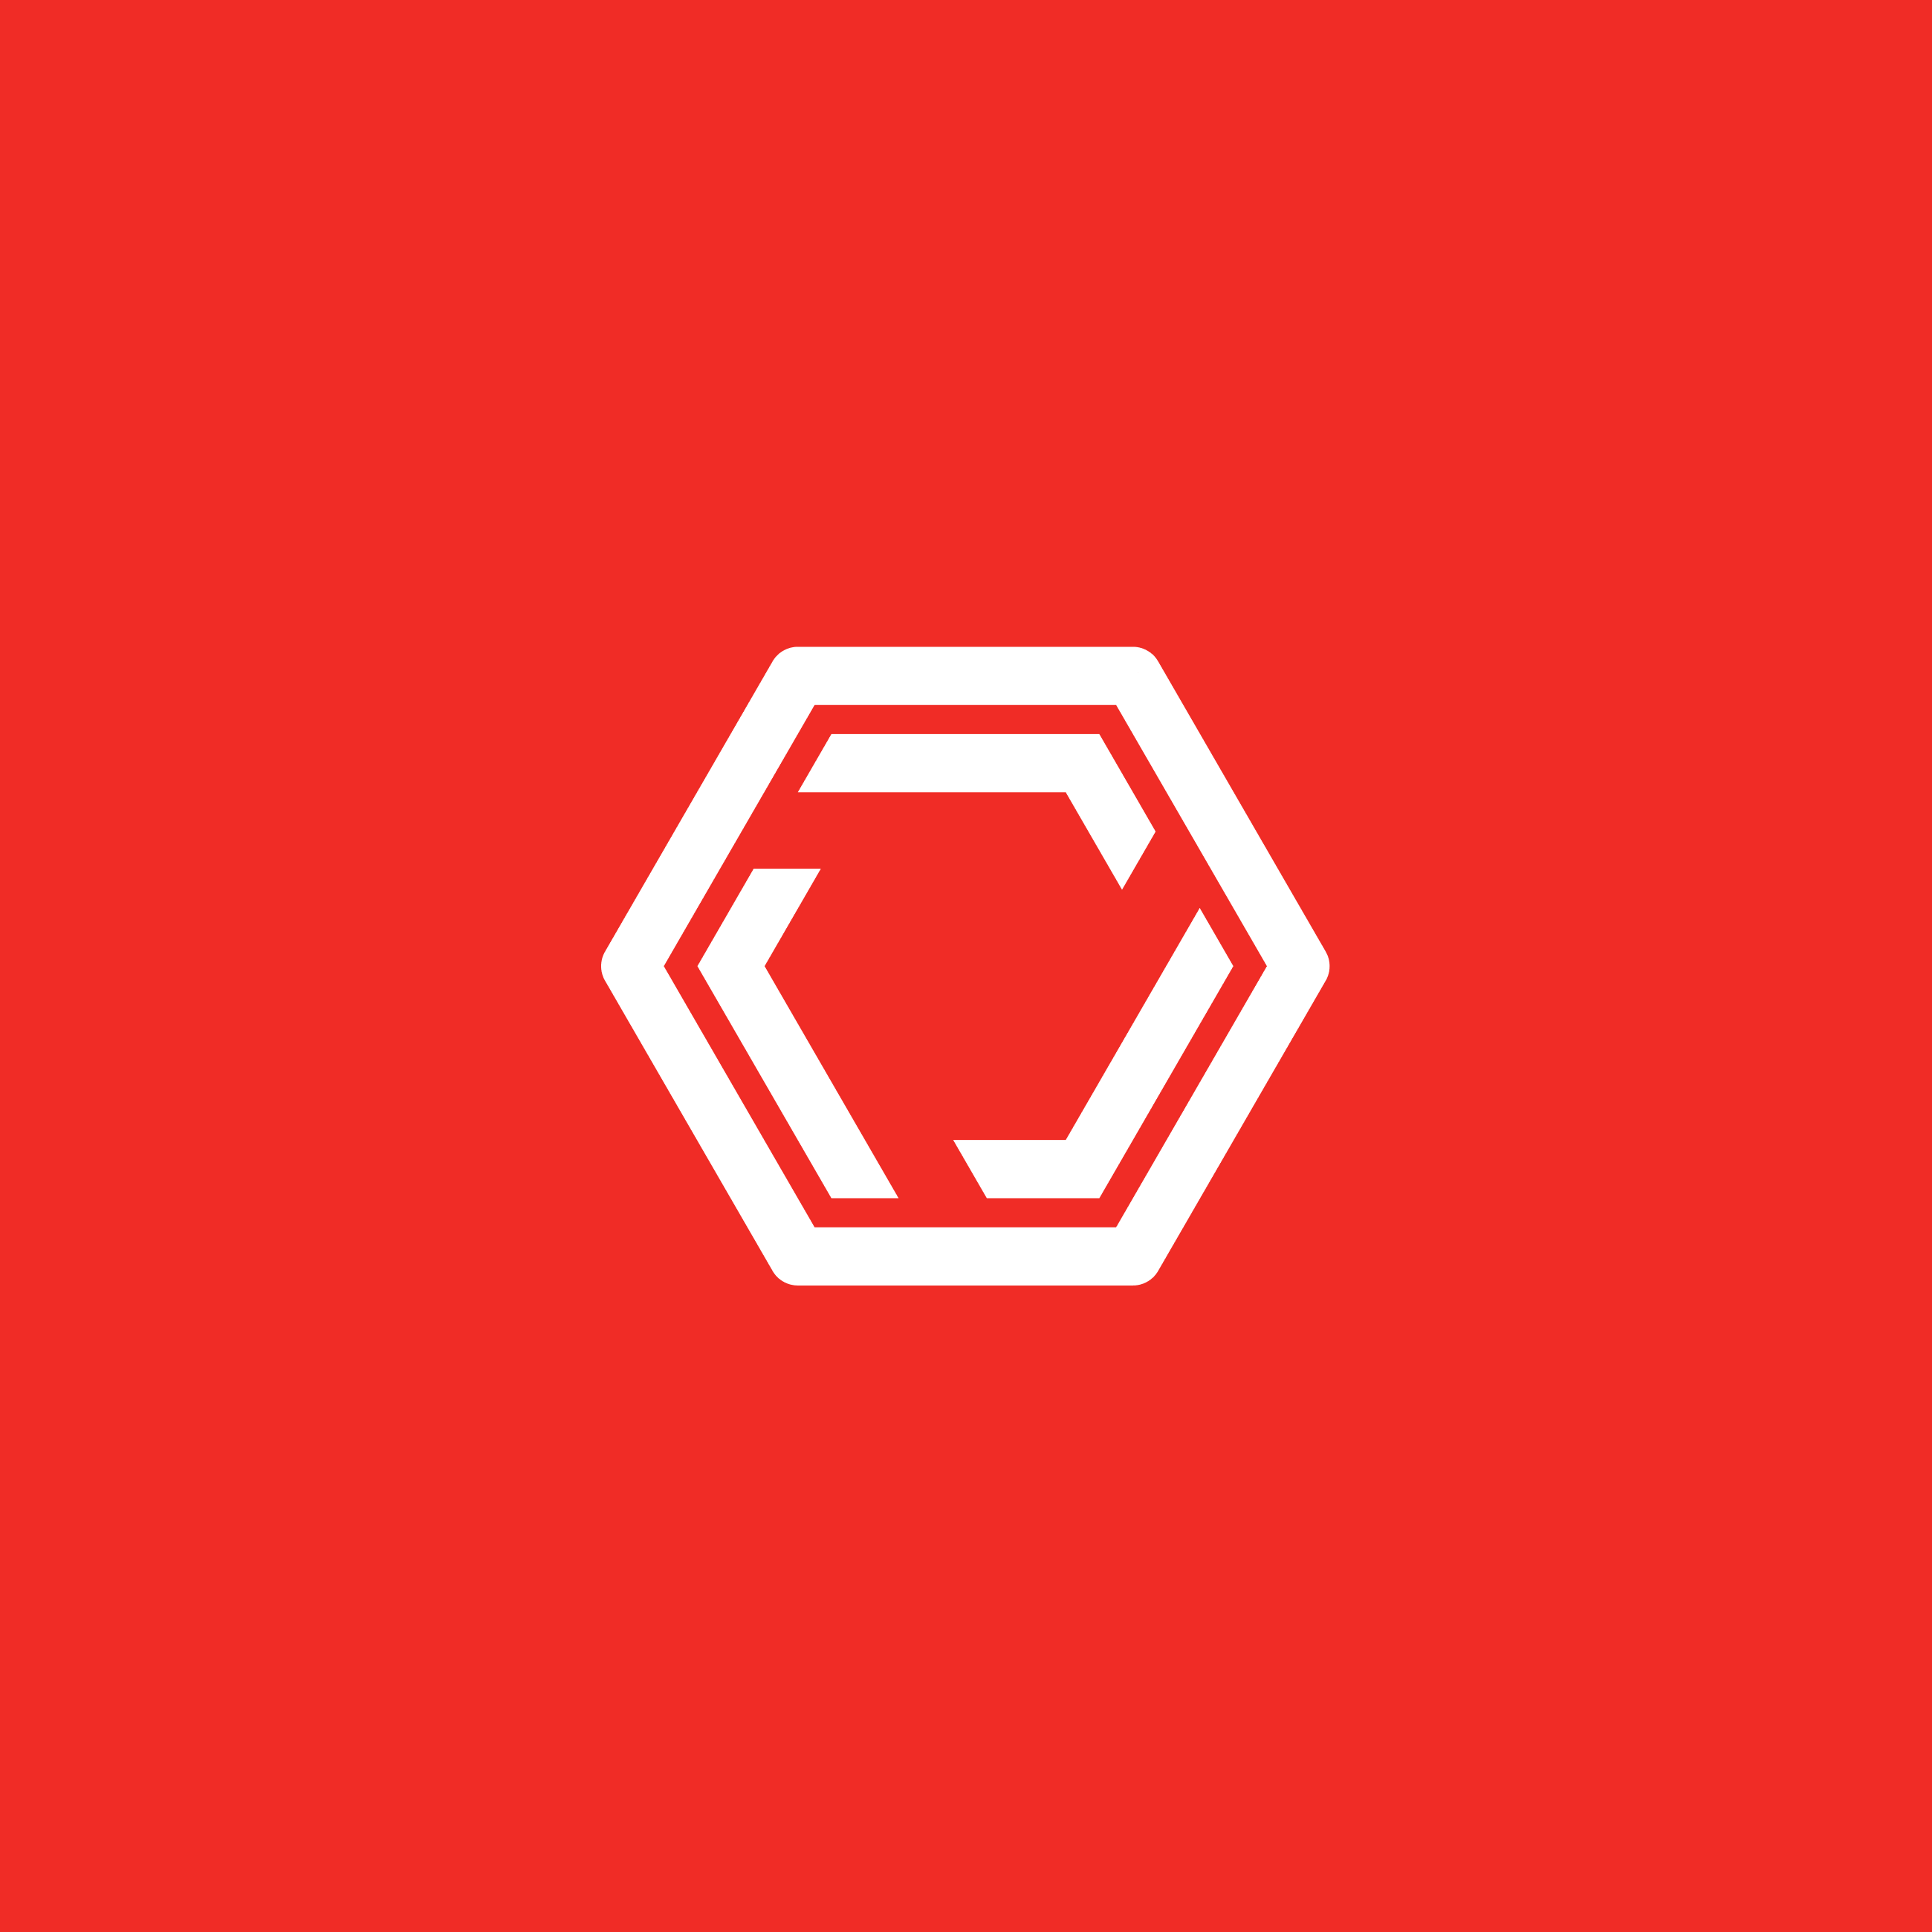 White mutagen logo square on red background